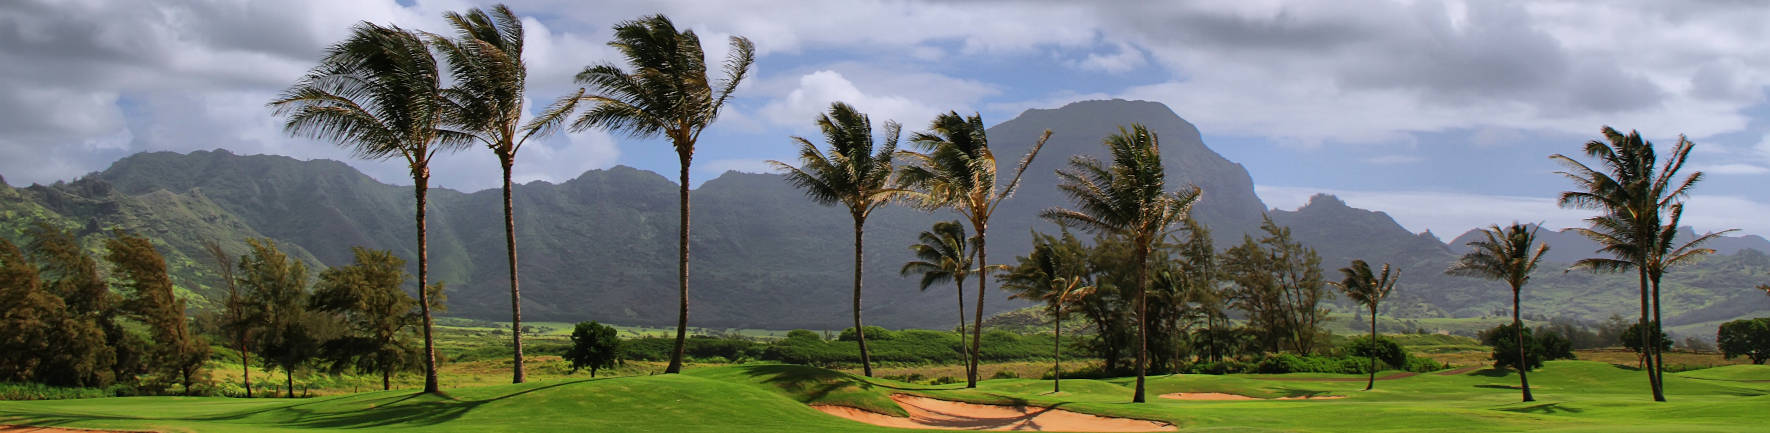 Poipu Golf Course on Kauai